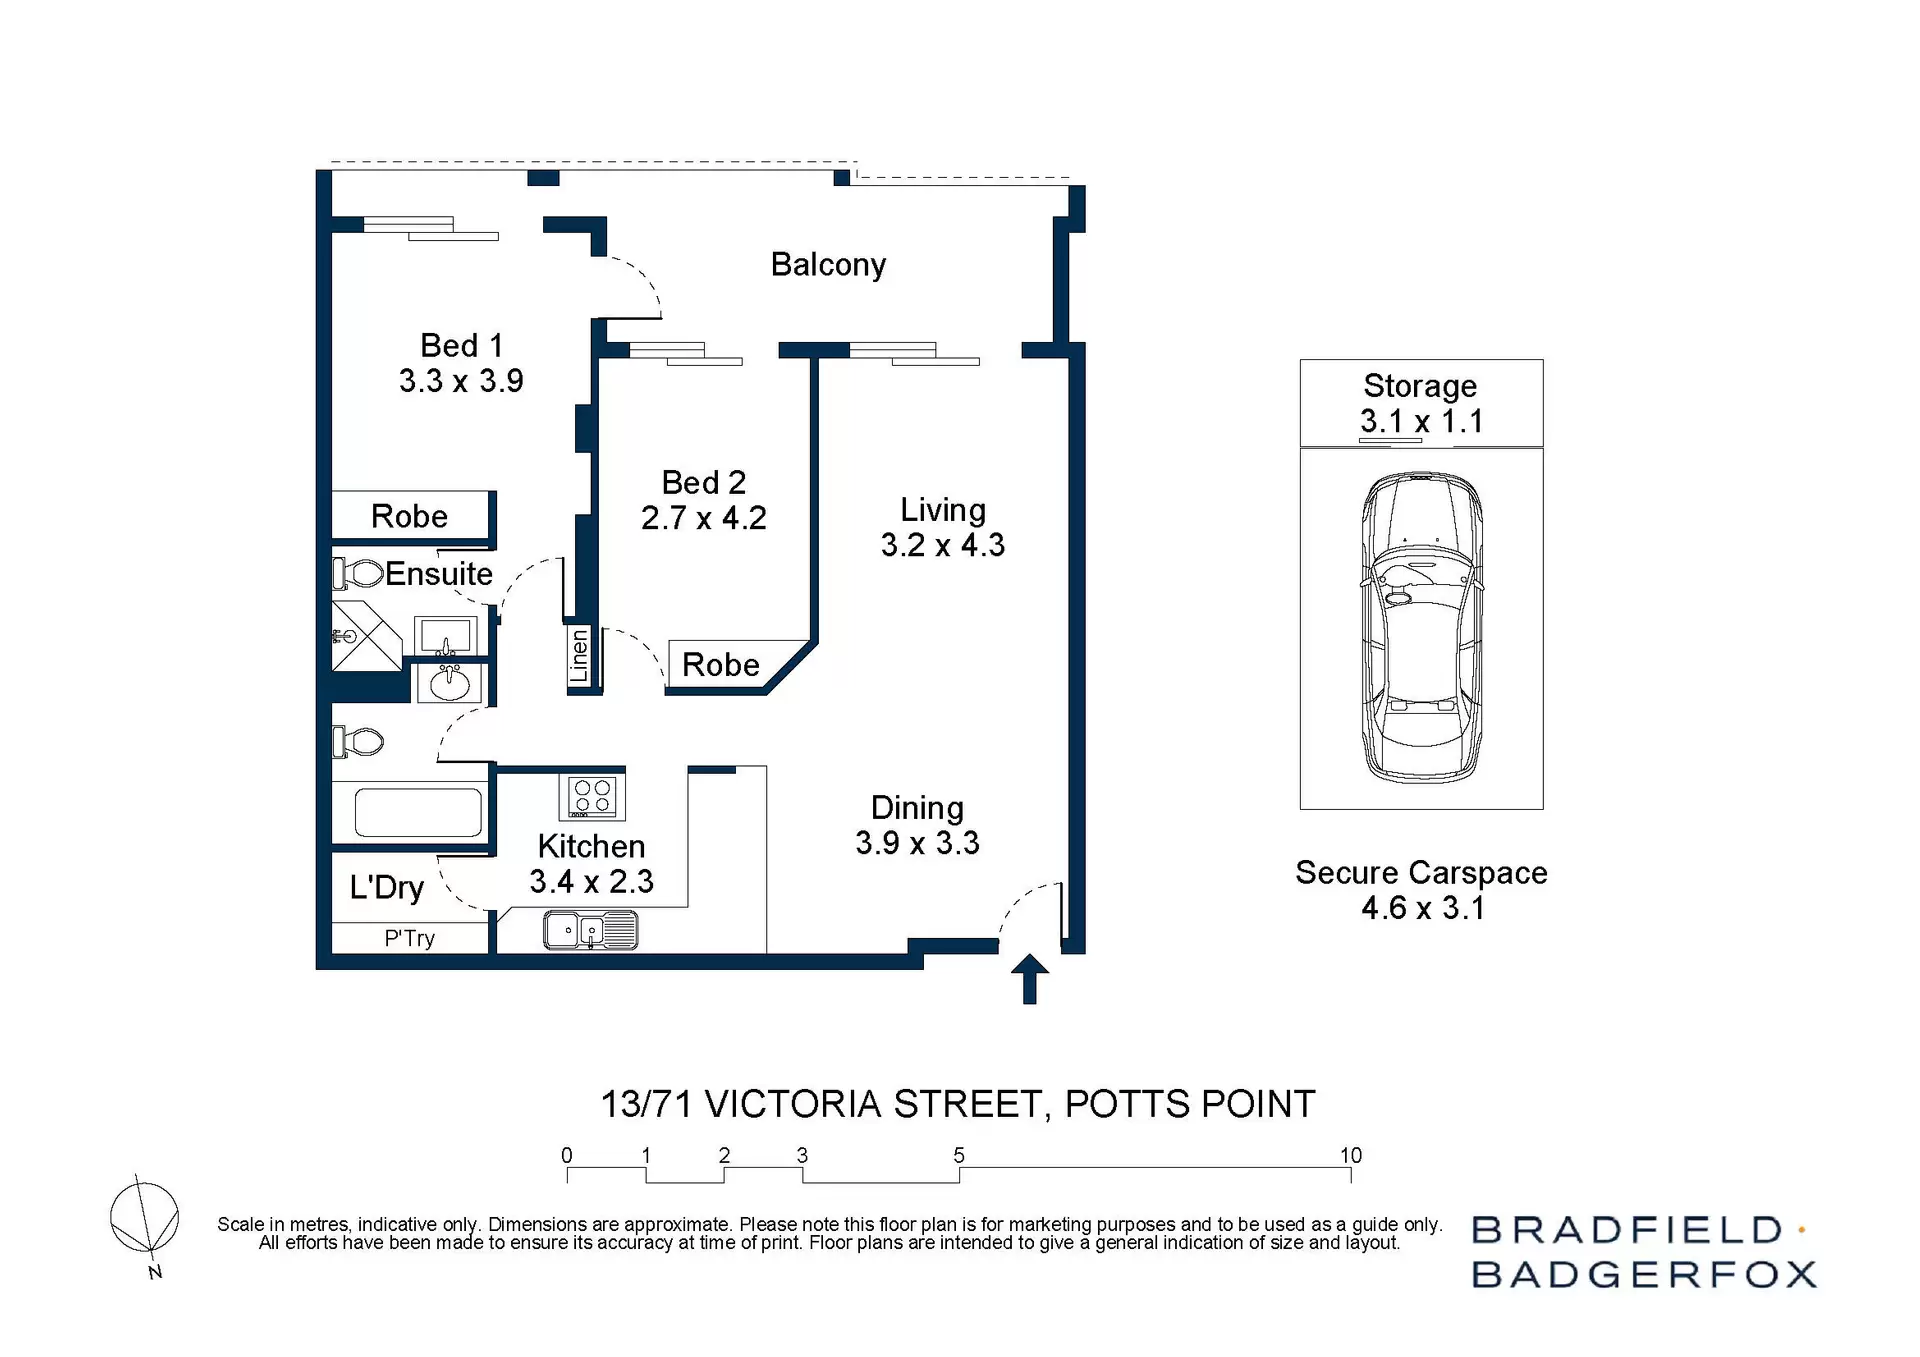 13/71 Victoria Street, Potts Point Sold by Bradfield Badgerfox - image 1